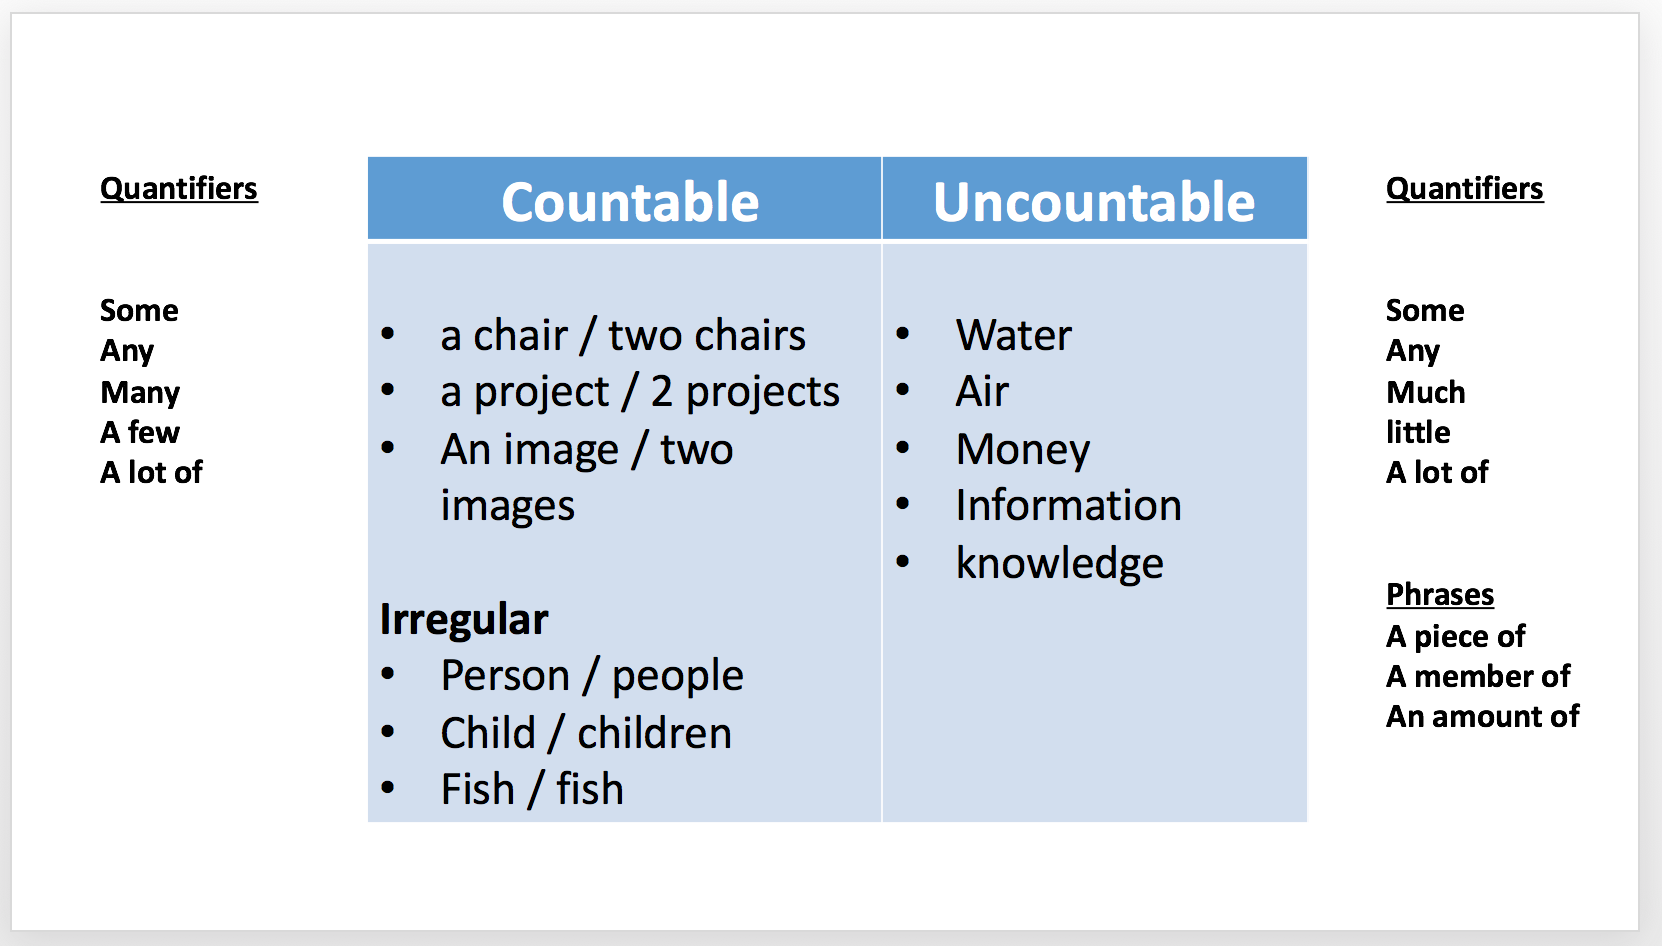 Uncountable Noun คือ อะไร